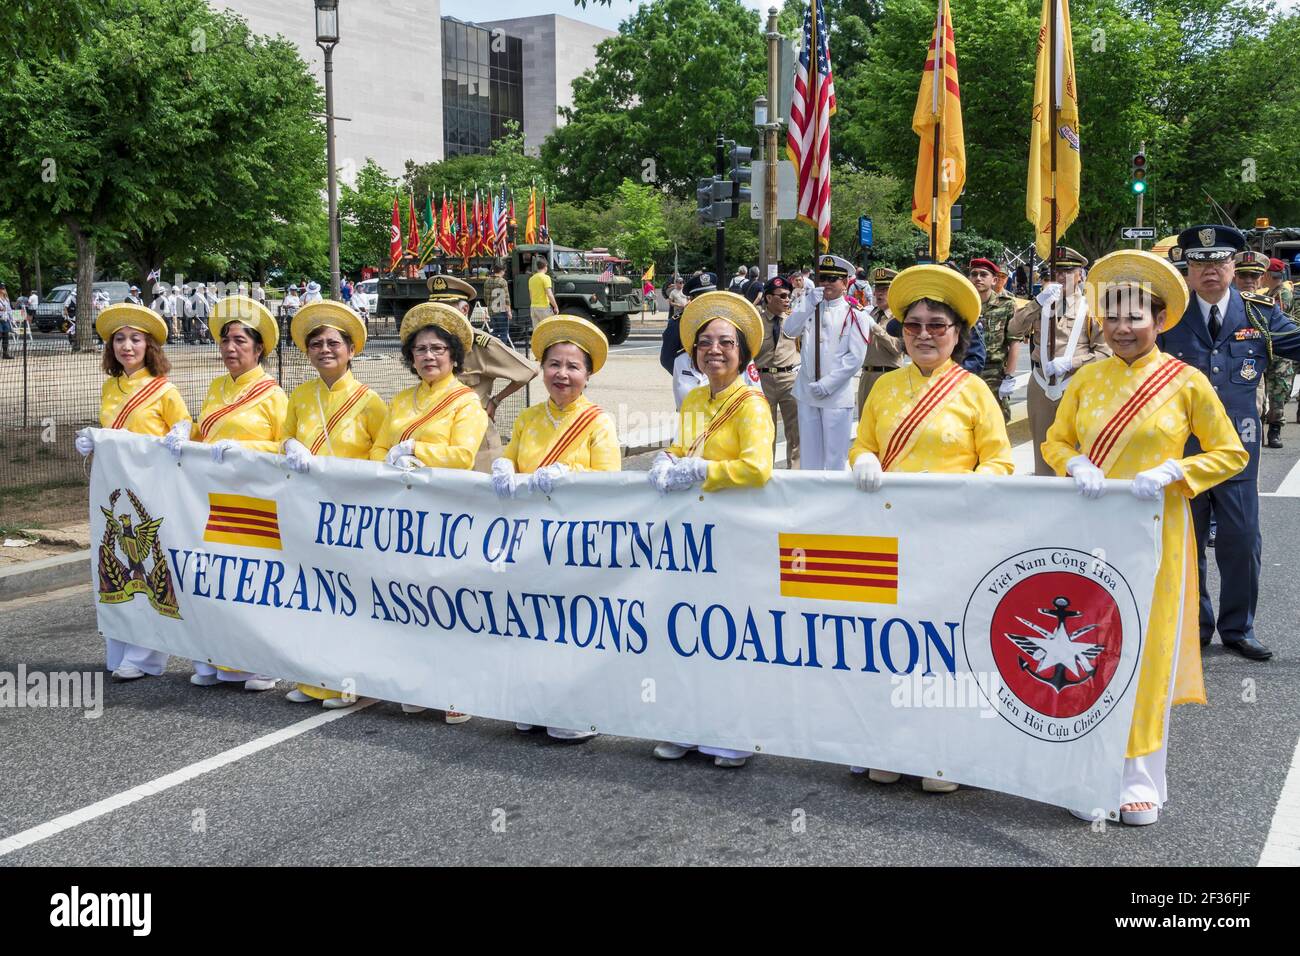 Washington DC,National Memorial Day Parade,Vietnam Veterans Associations Coalition banner,Asian women wearing traditional dress, Stock Photo